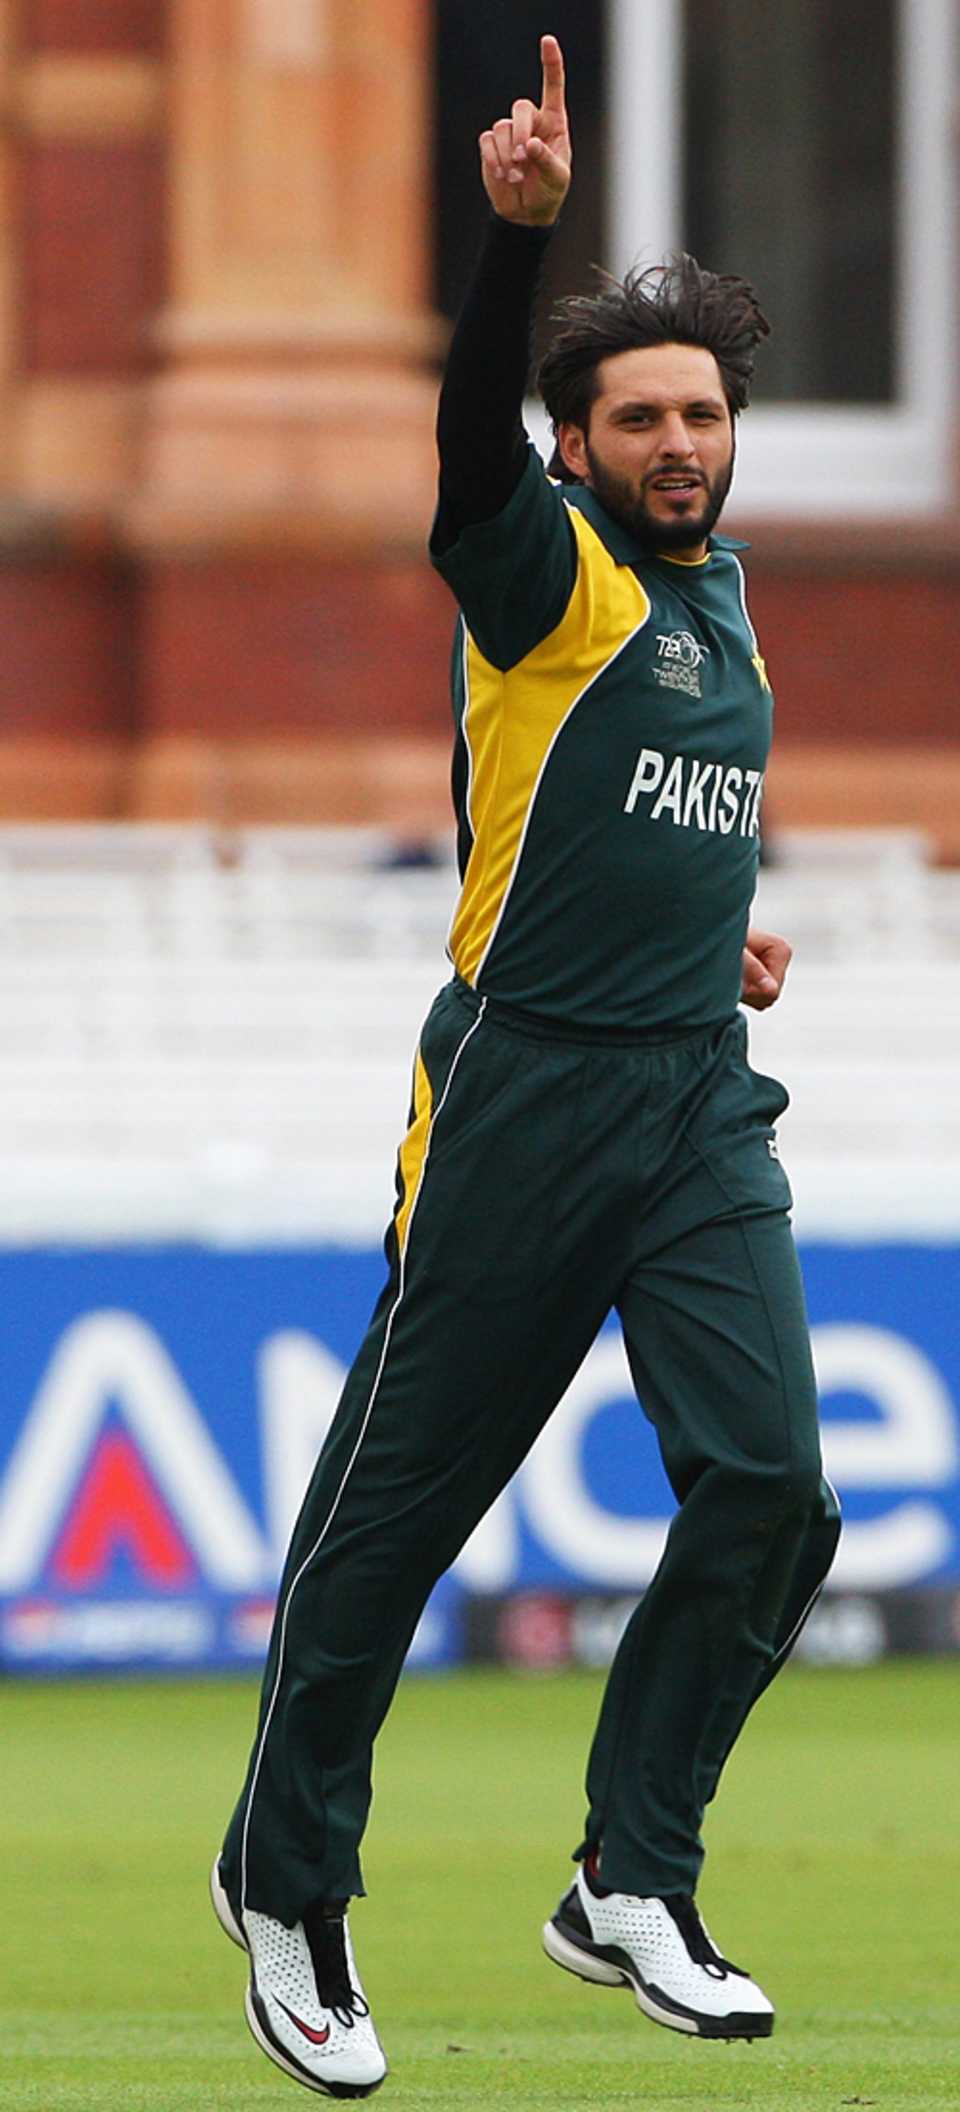 Shahid Afridi celebrates another wicket